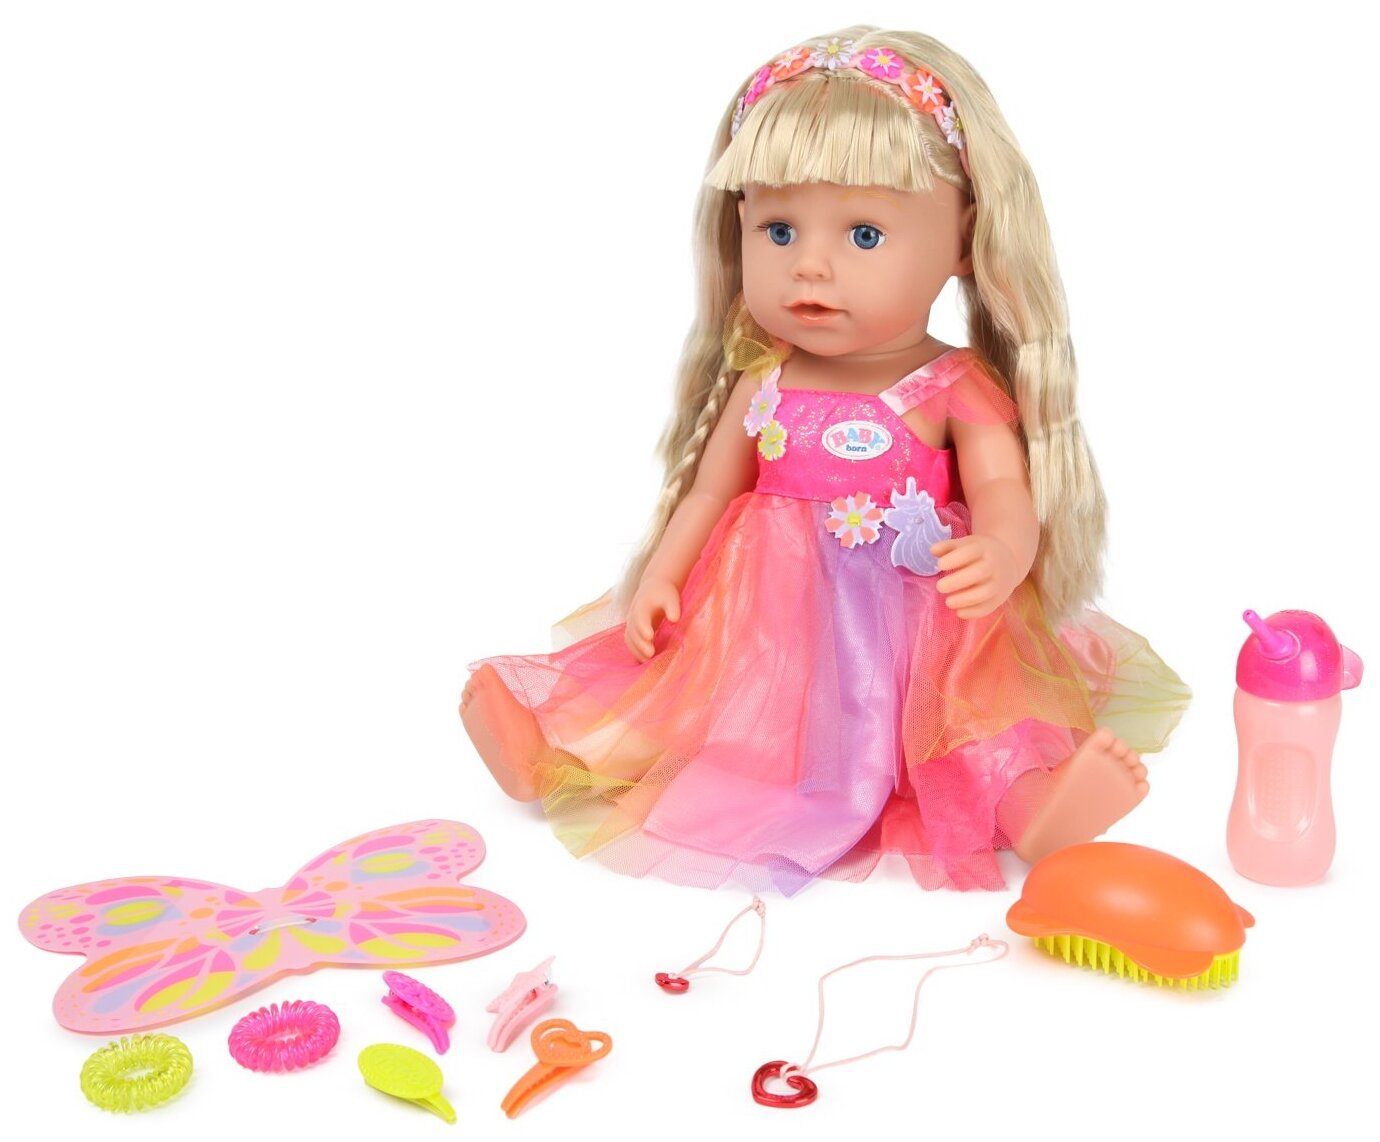 Интерактивная кукла Zapf Creation Baby Born Soft Touch в платье единорога, 43 см, 833-711